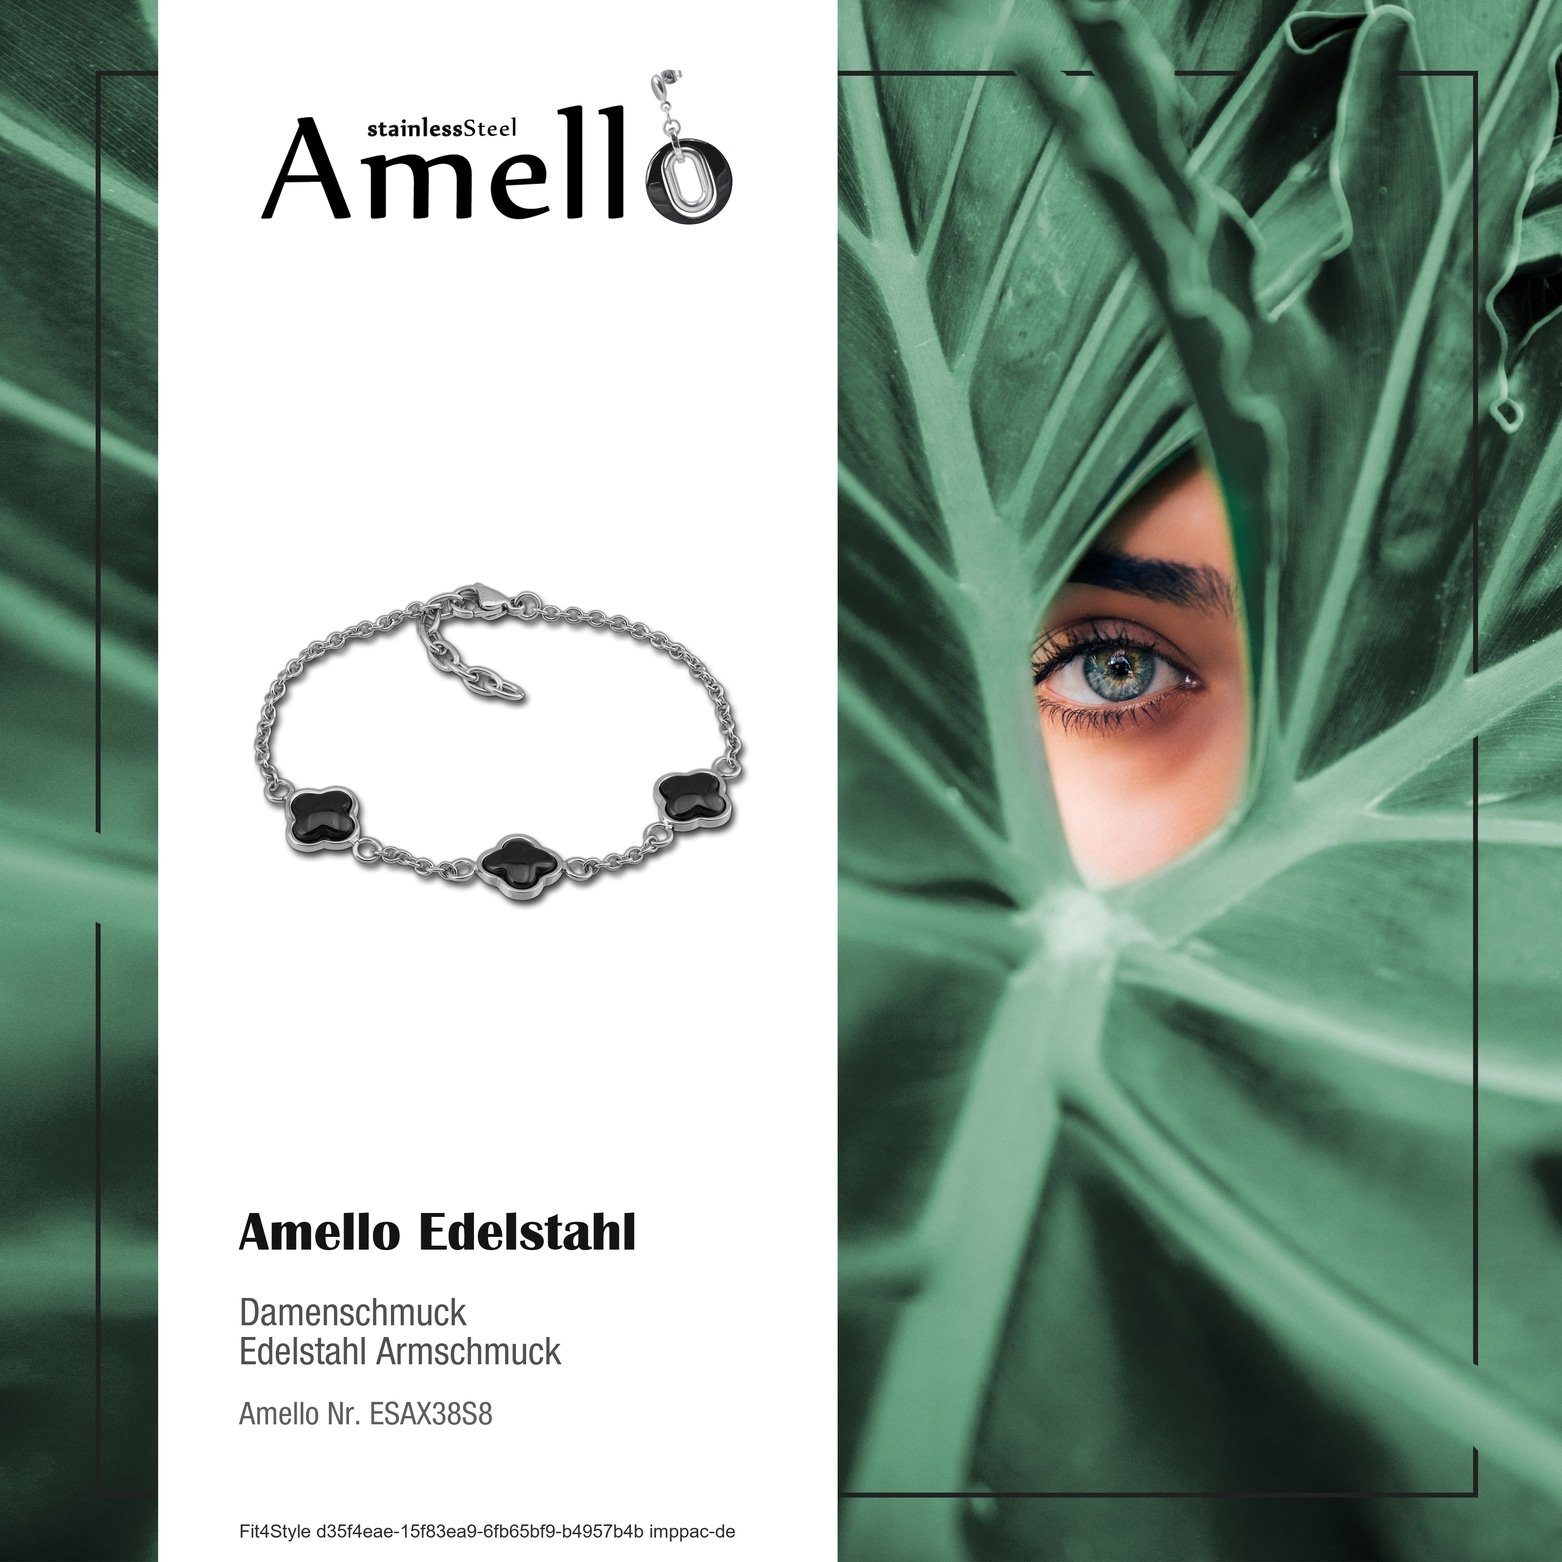 Edelstahl Steel) Armband schwarz für Armbänder Damen Amello Amello (Armband), Kleeblatt silber (Stainless Edelstahlarmband